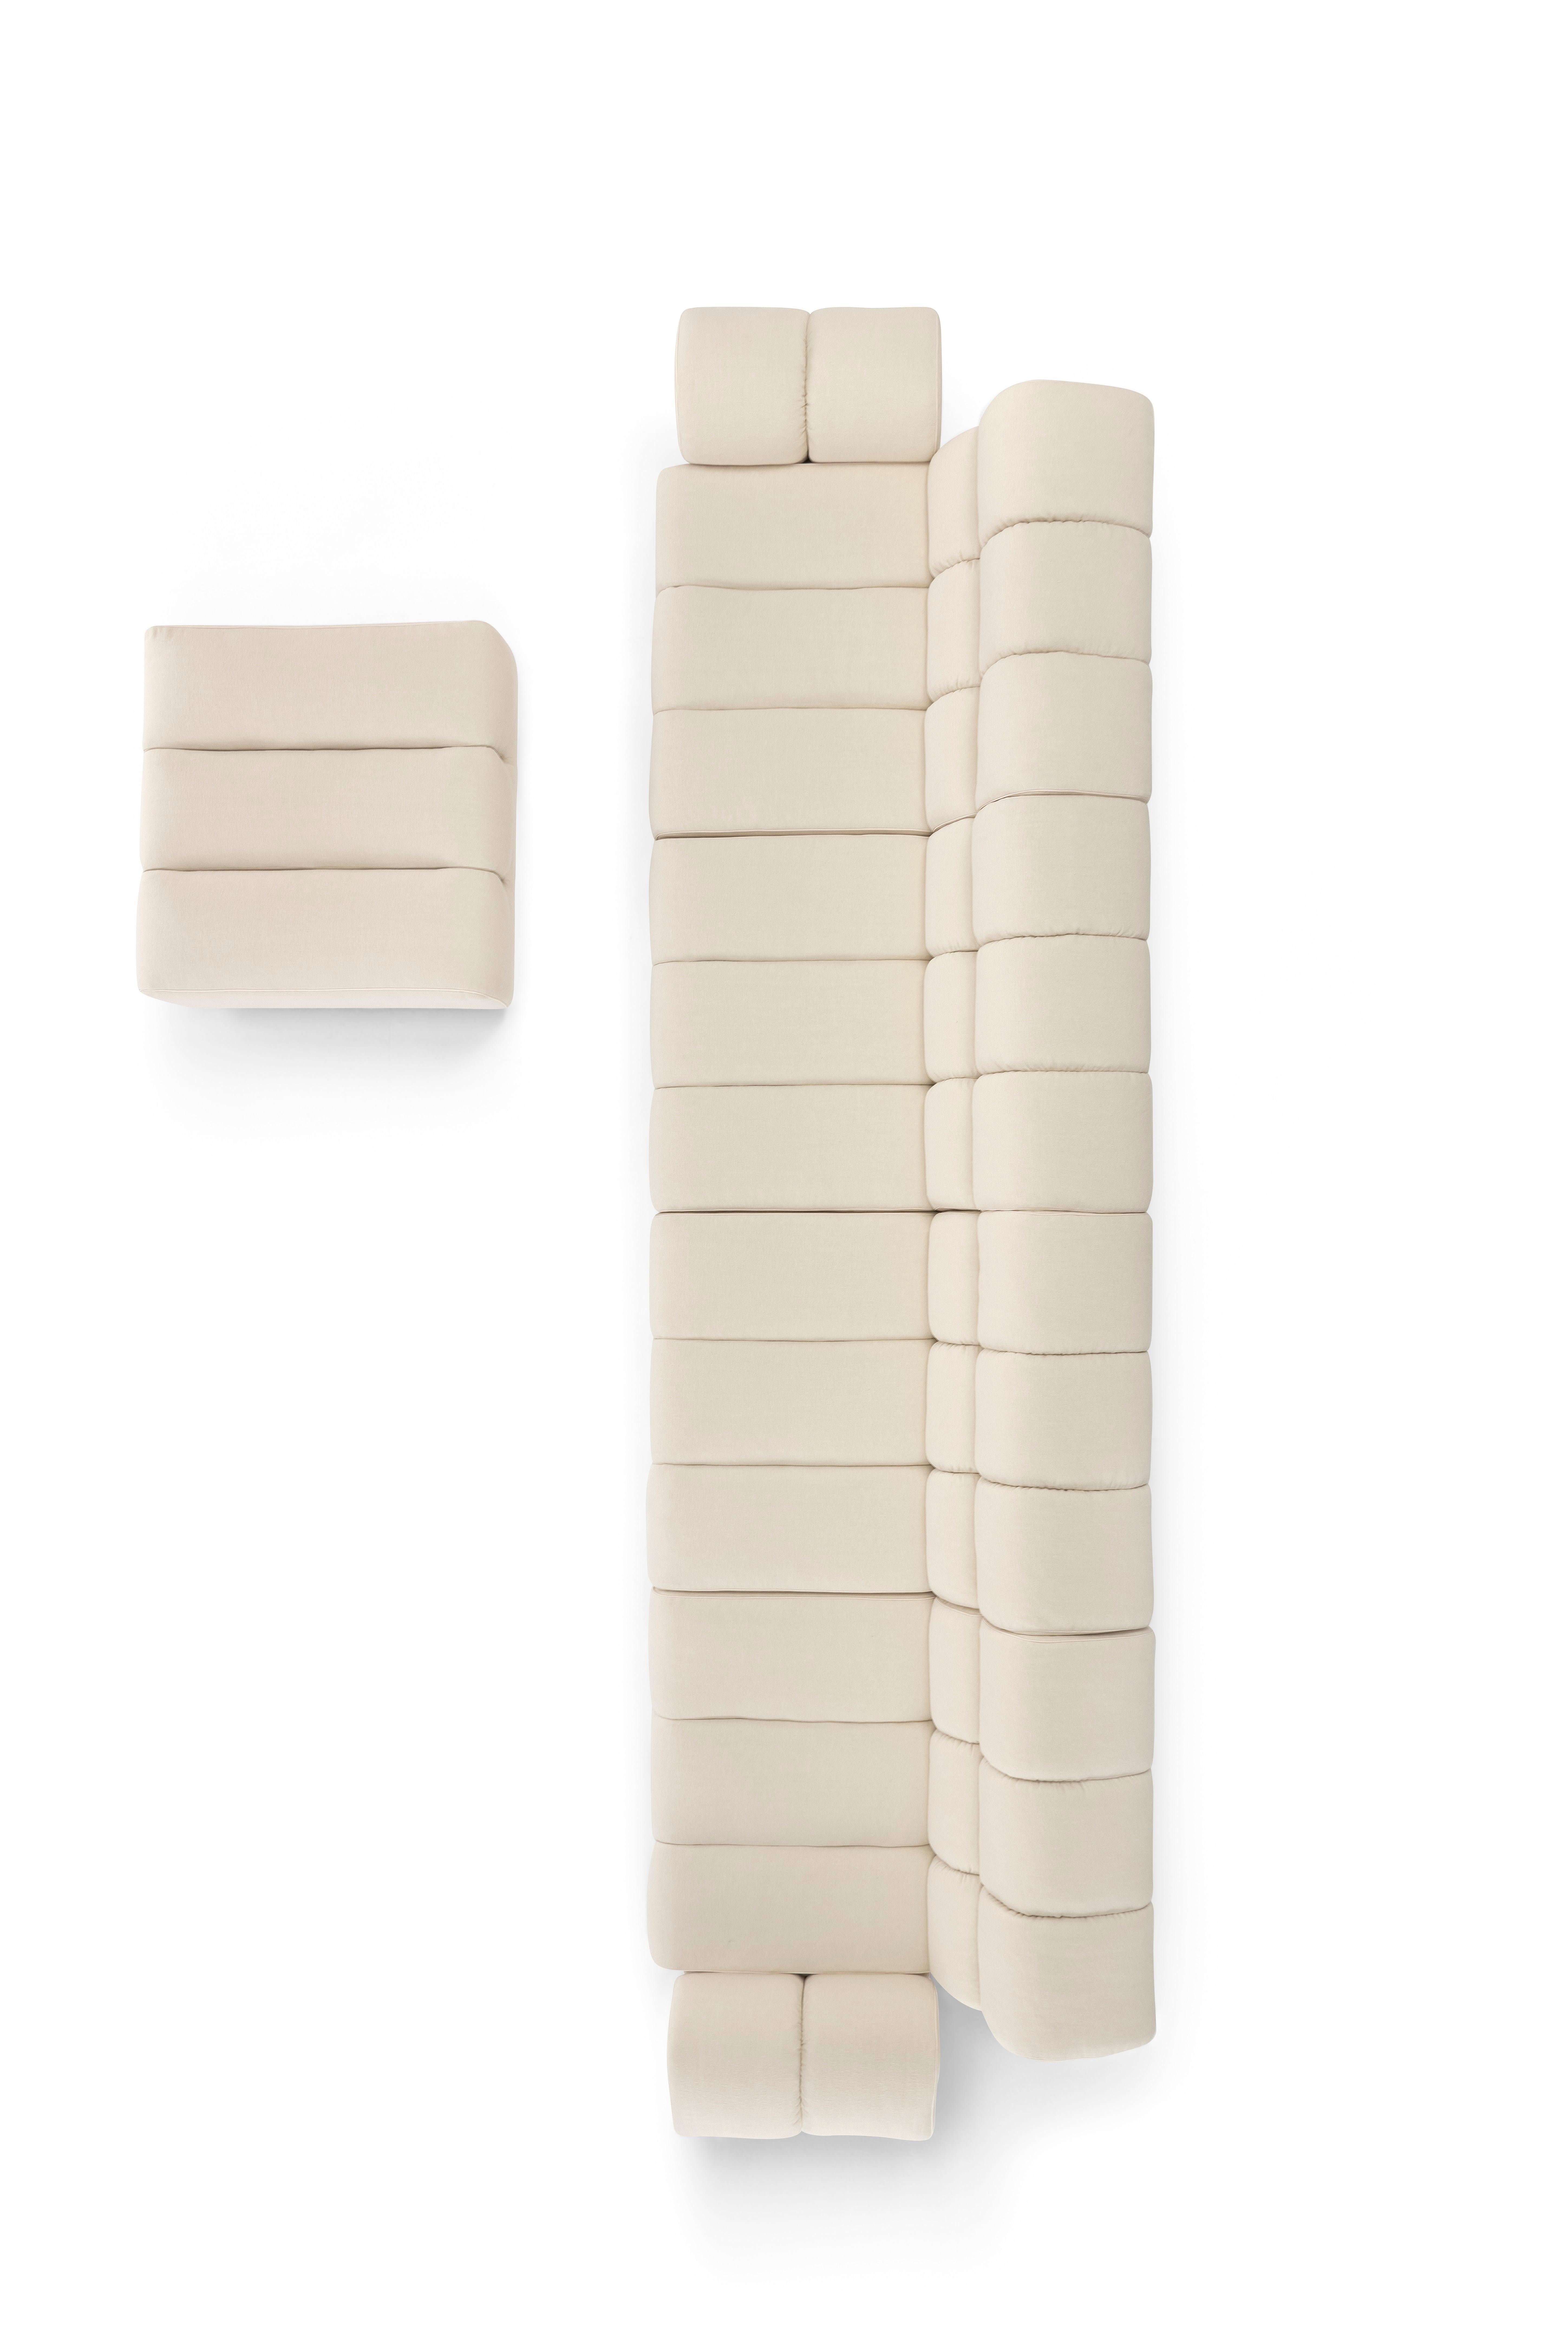 Contemporary White Sofa 'Palmo' by Amura Lab, Fibris 03 For Sale 1